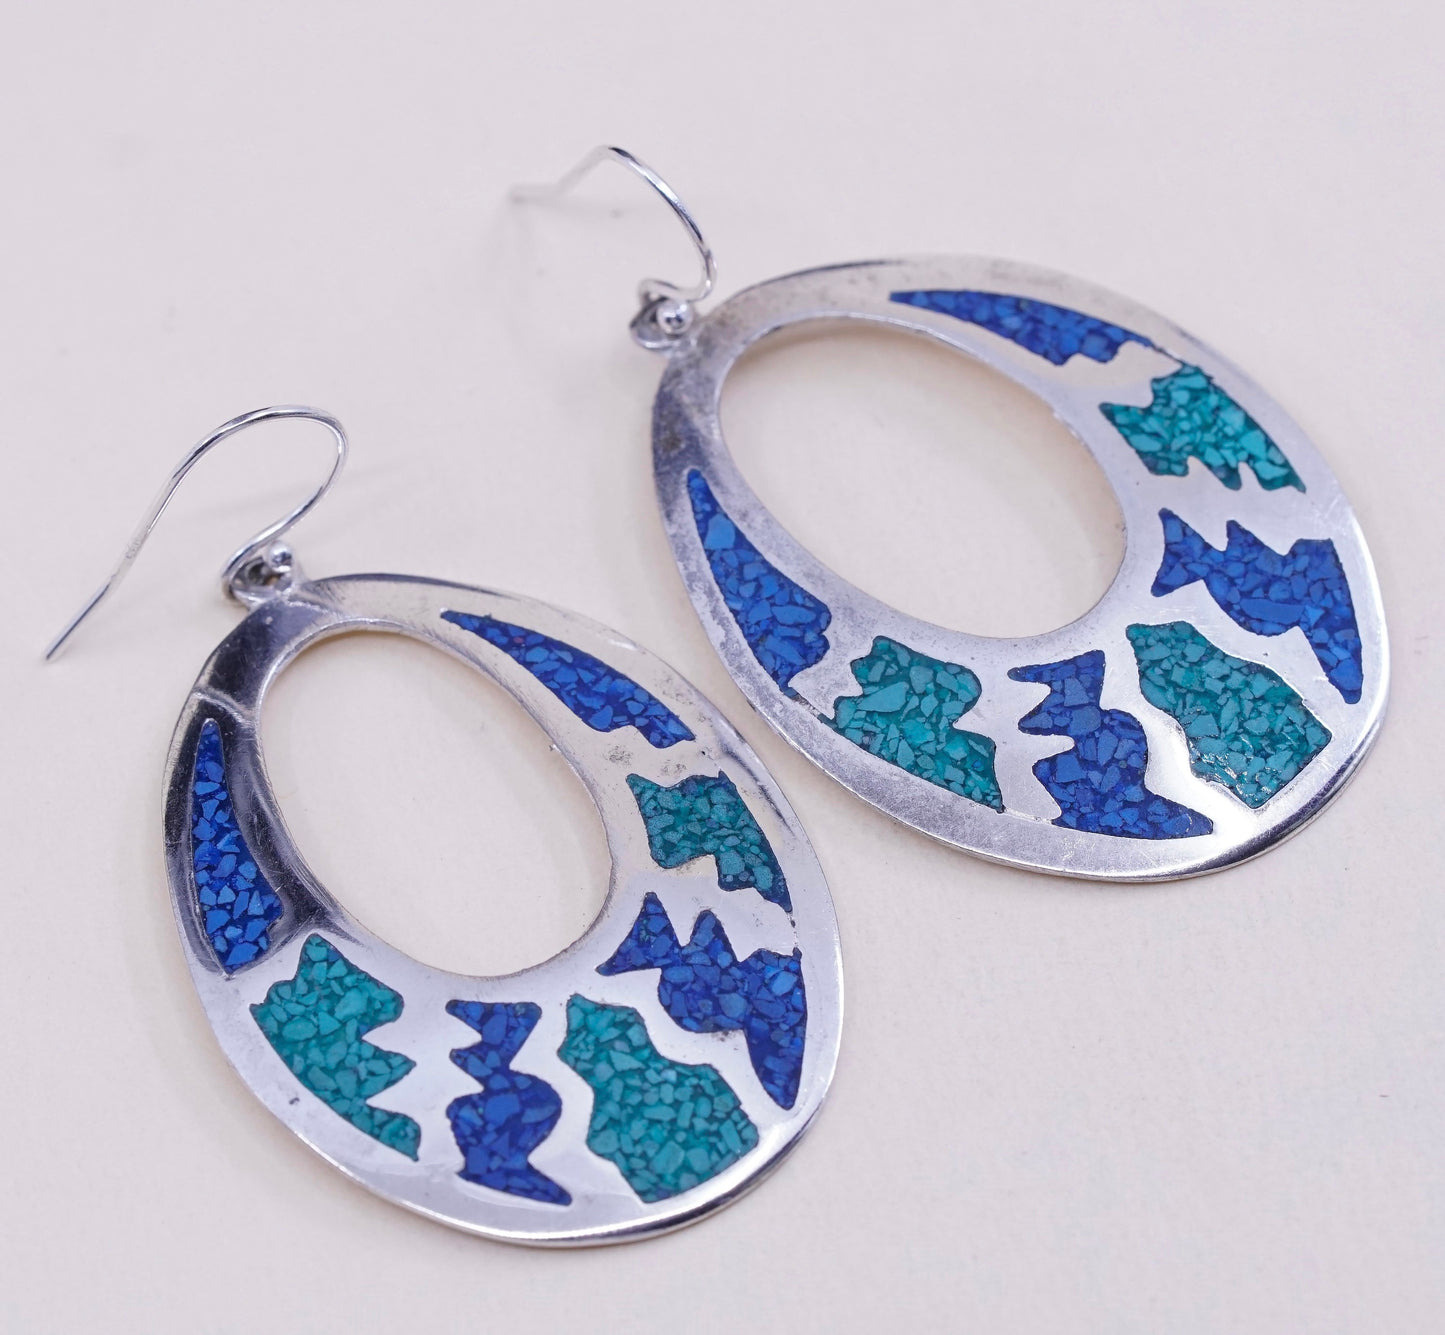 Vintage alpaca silver handmade earrings, huge oval dangles with turquoise